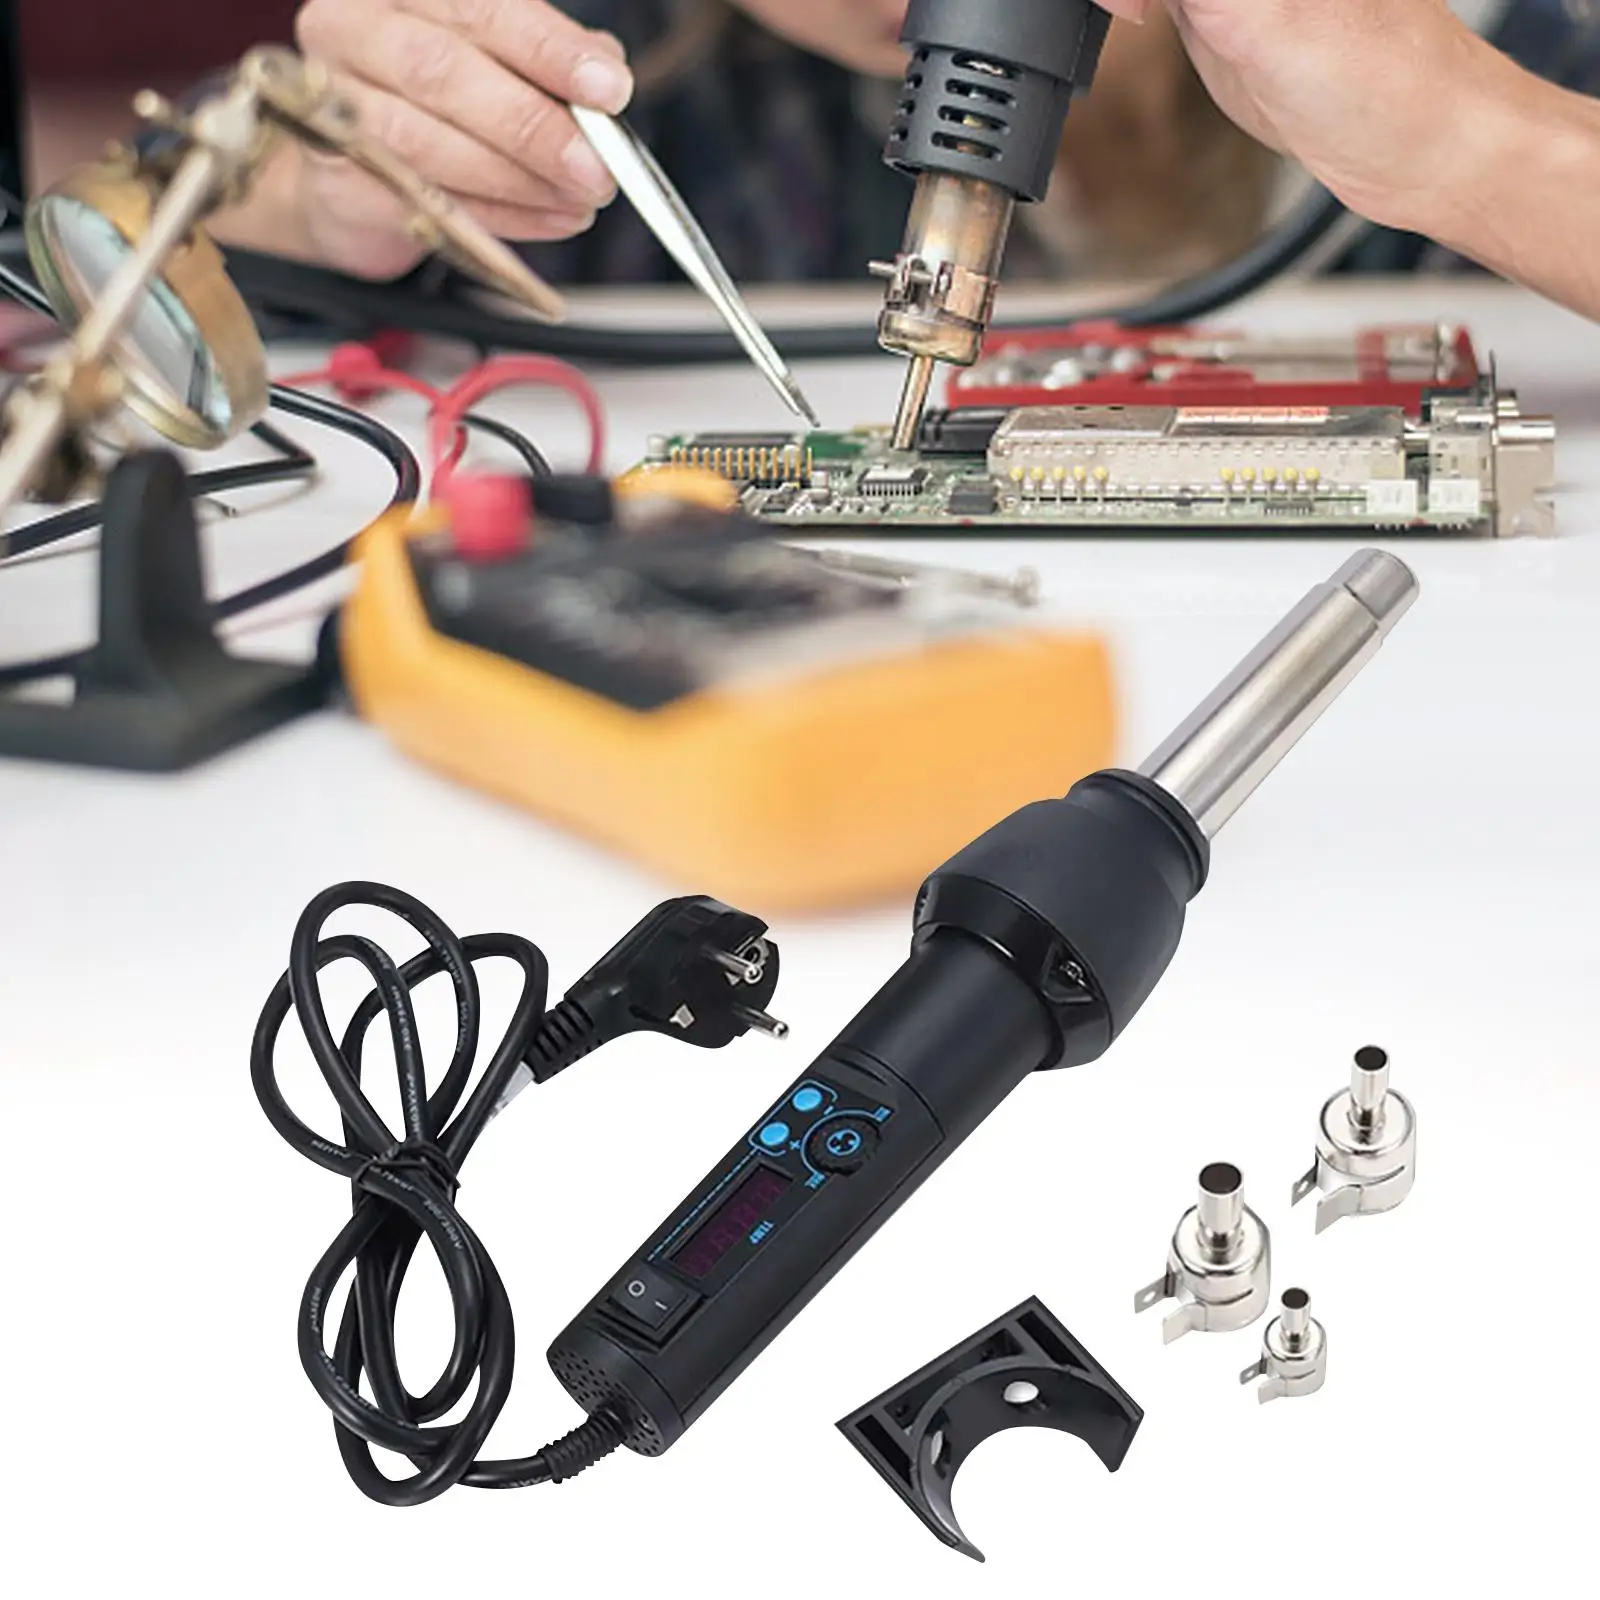 Handheld Mini Hot Air tool with Nozzle 3 Temperature Settings Digital Display Overload Protection Electric Hot Air Pen for DIY